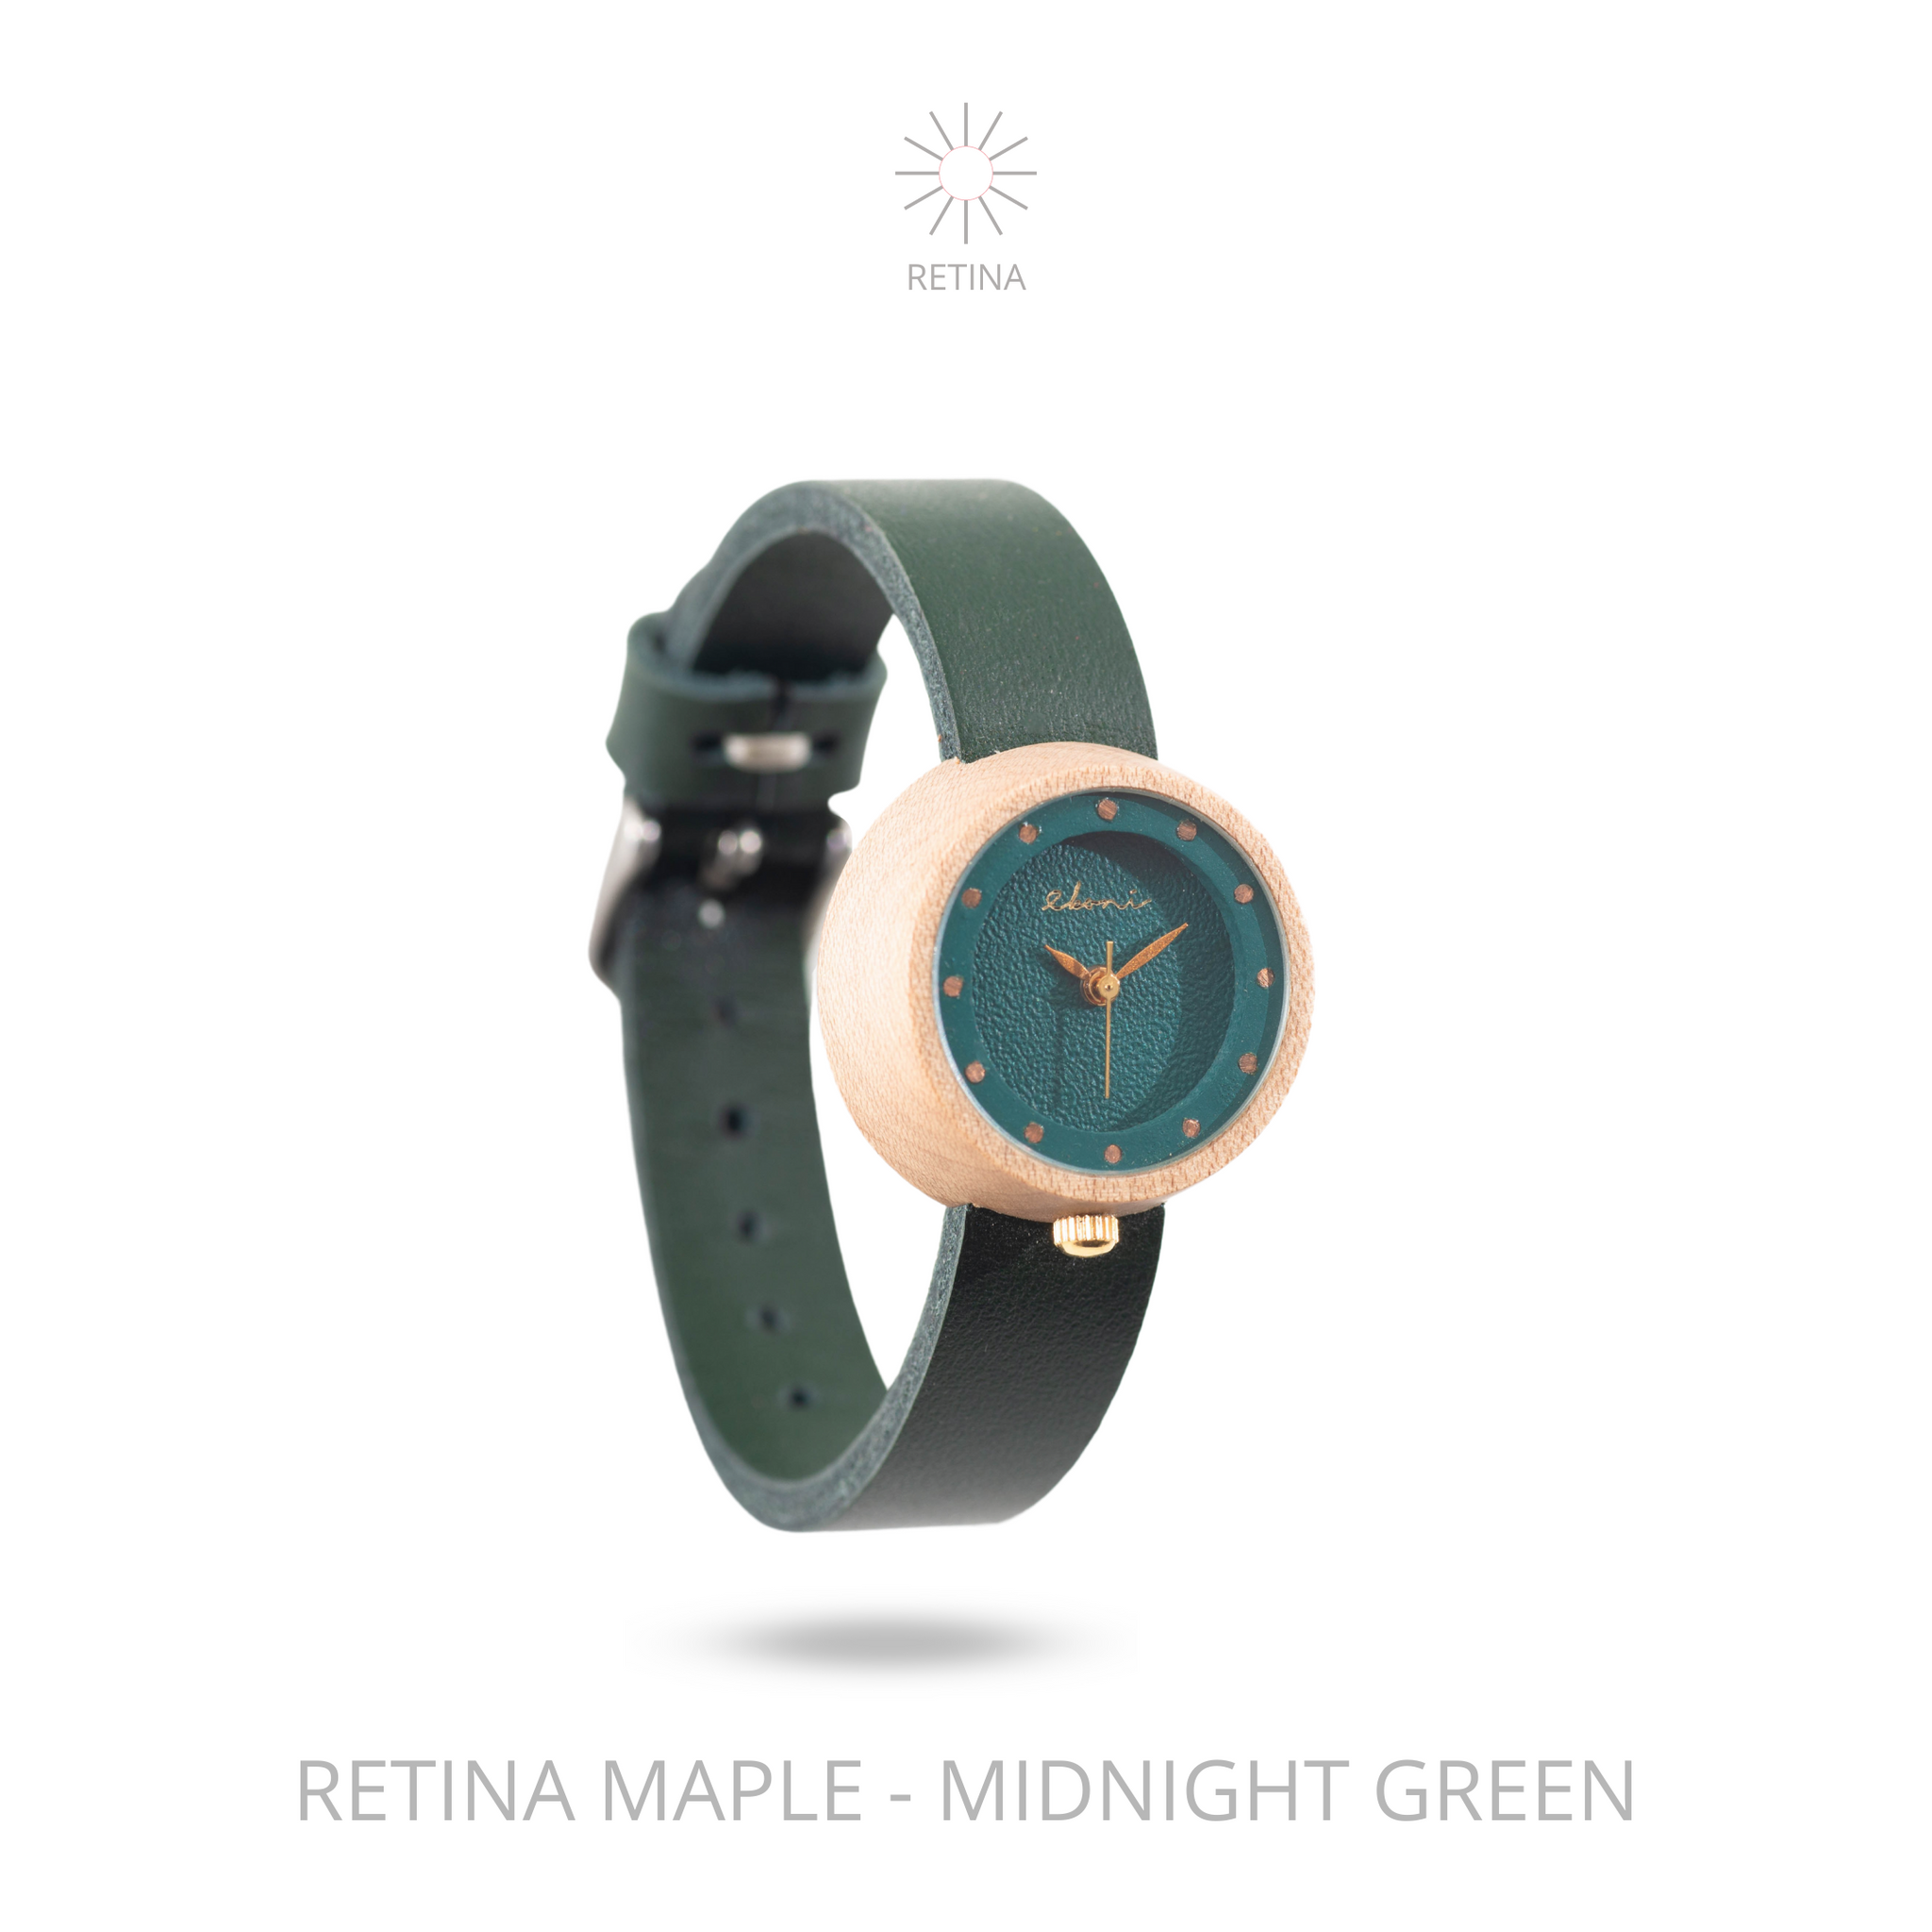 Eboni Retina Maple - Midnight Green